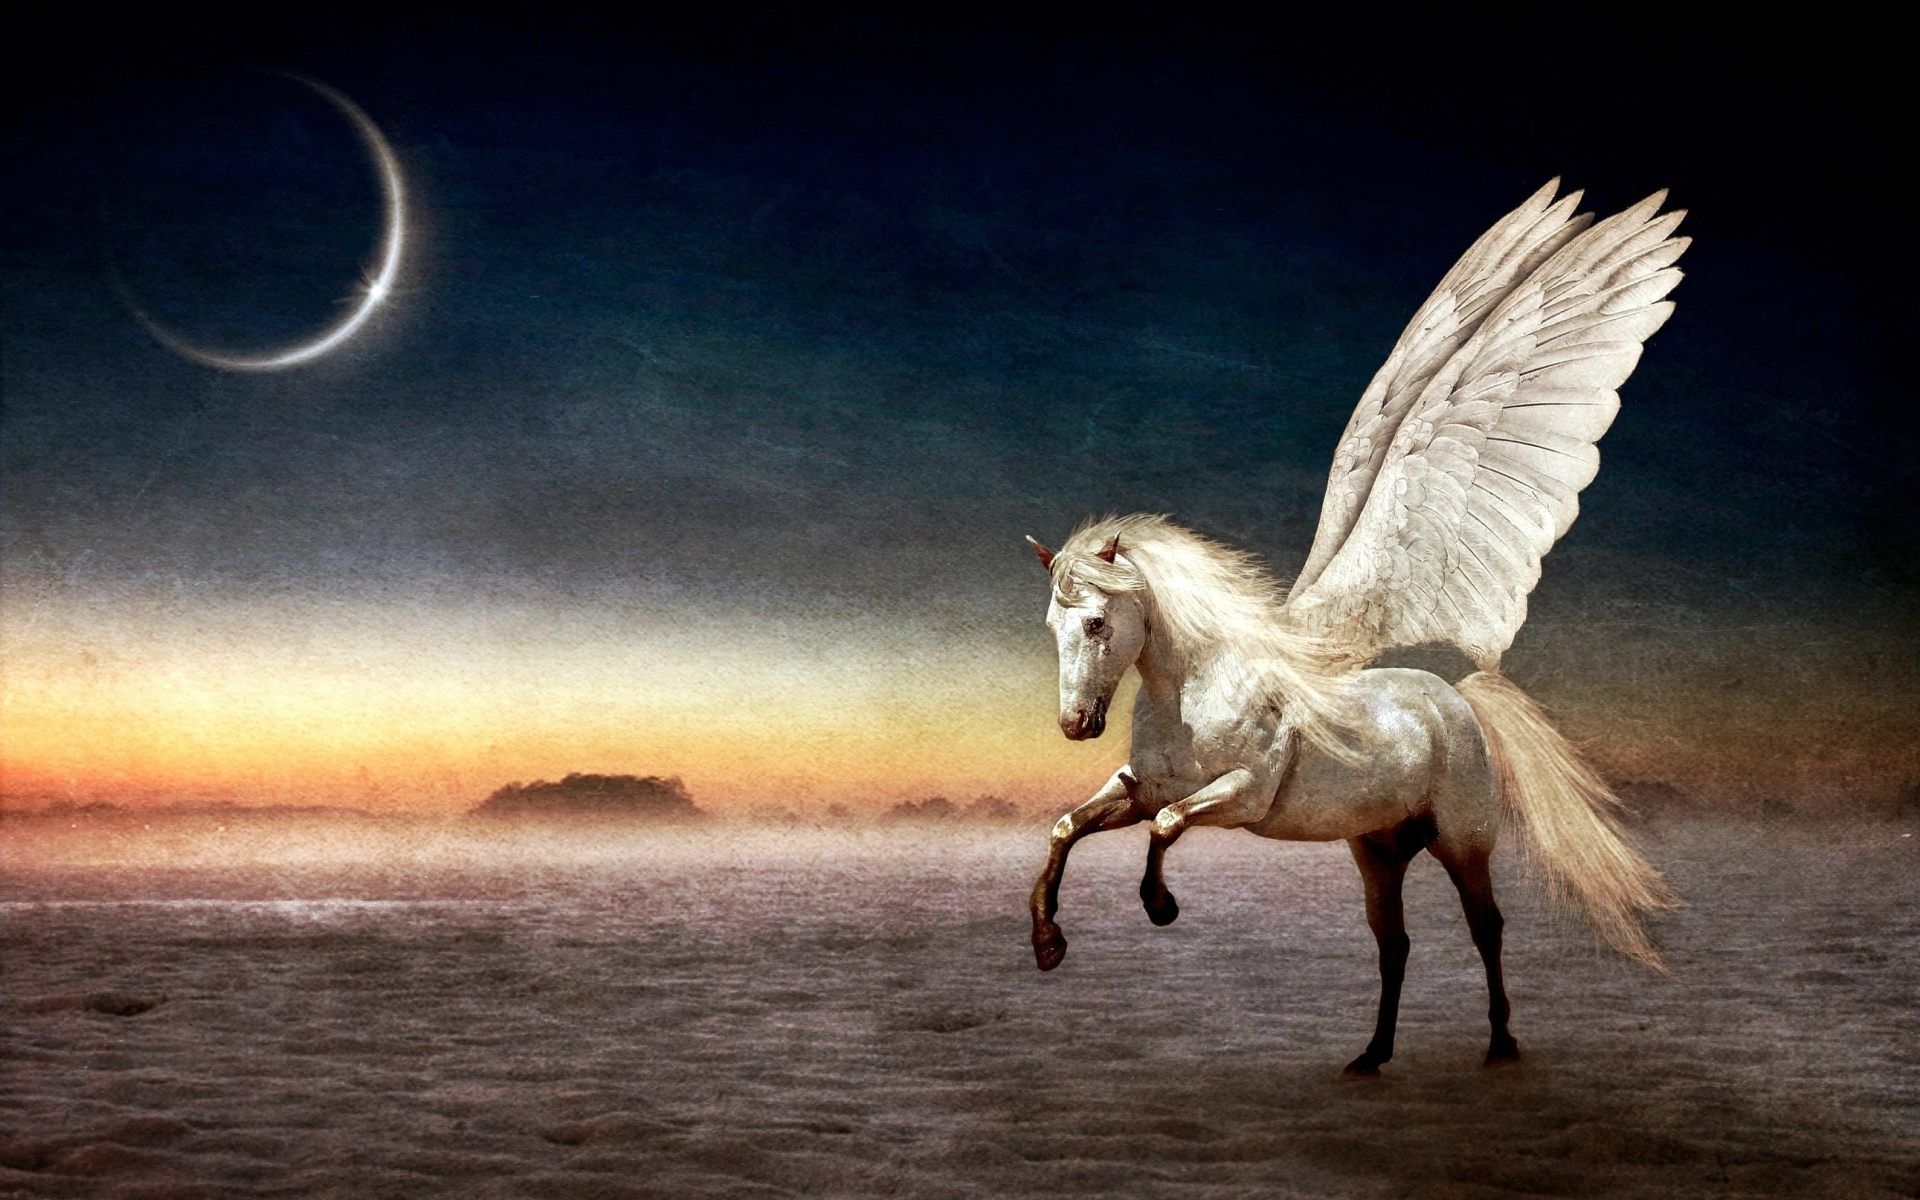 Pegasus Flying Horse Wallpaper For Desktop, PC & Mobile. Horse wallpaper, Horses, Pegasus